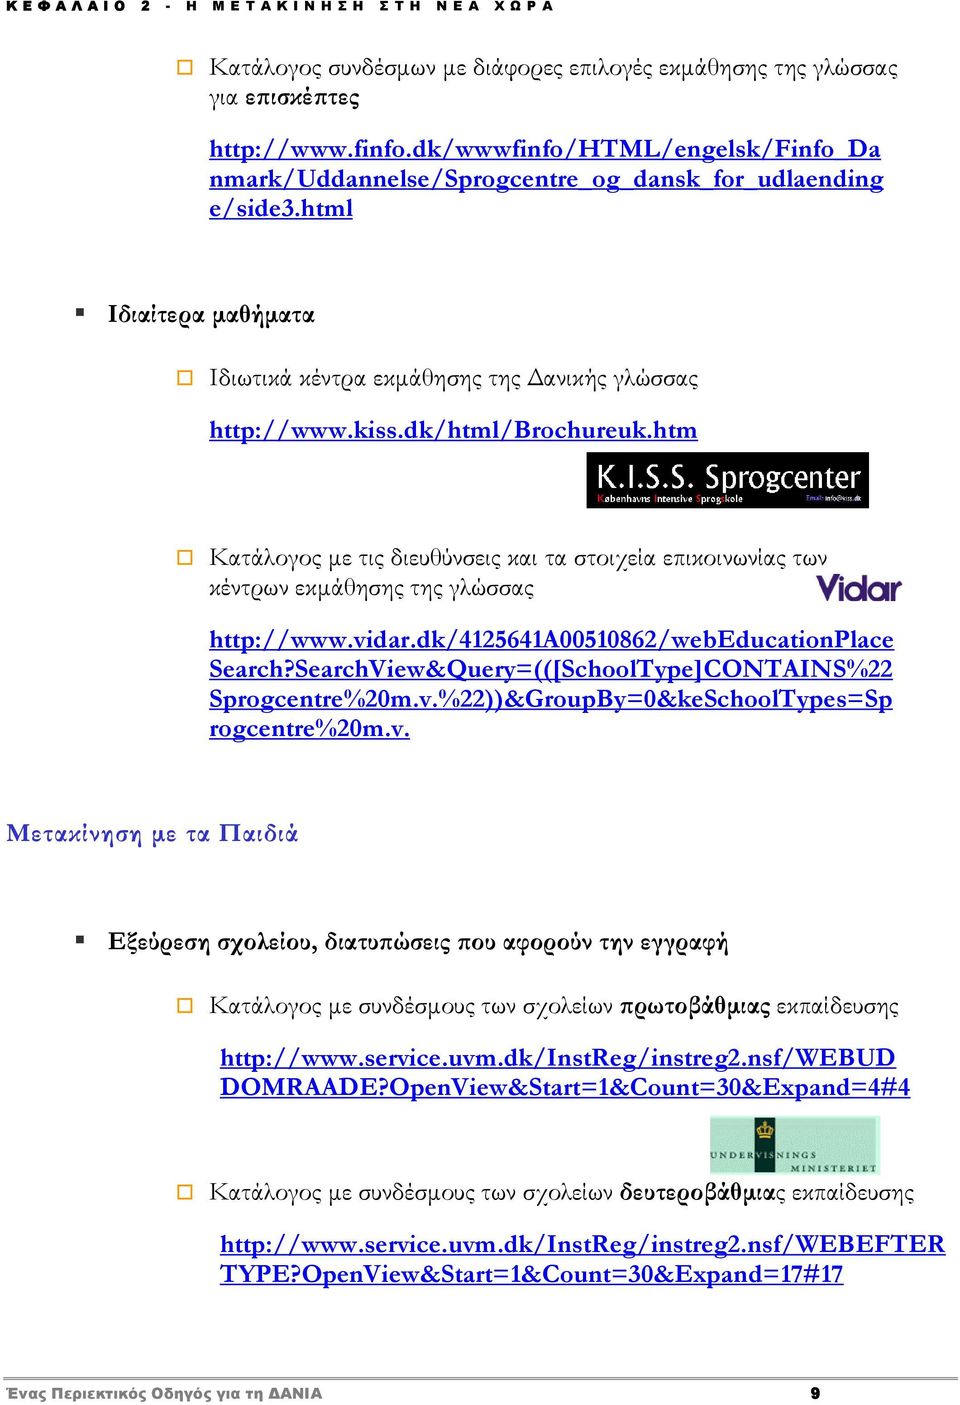 htm Κατάλογος με τις διευθύνσεις και τα στοιχεία επικοινωνίας των κέντρων εκμάθησης της γλώσσας http://www.vidar.dk/4125641a00510862/webeducationplace Search?